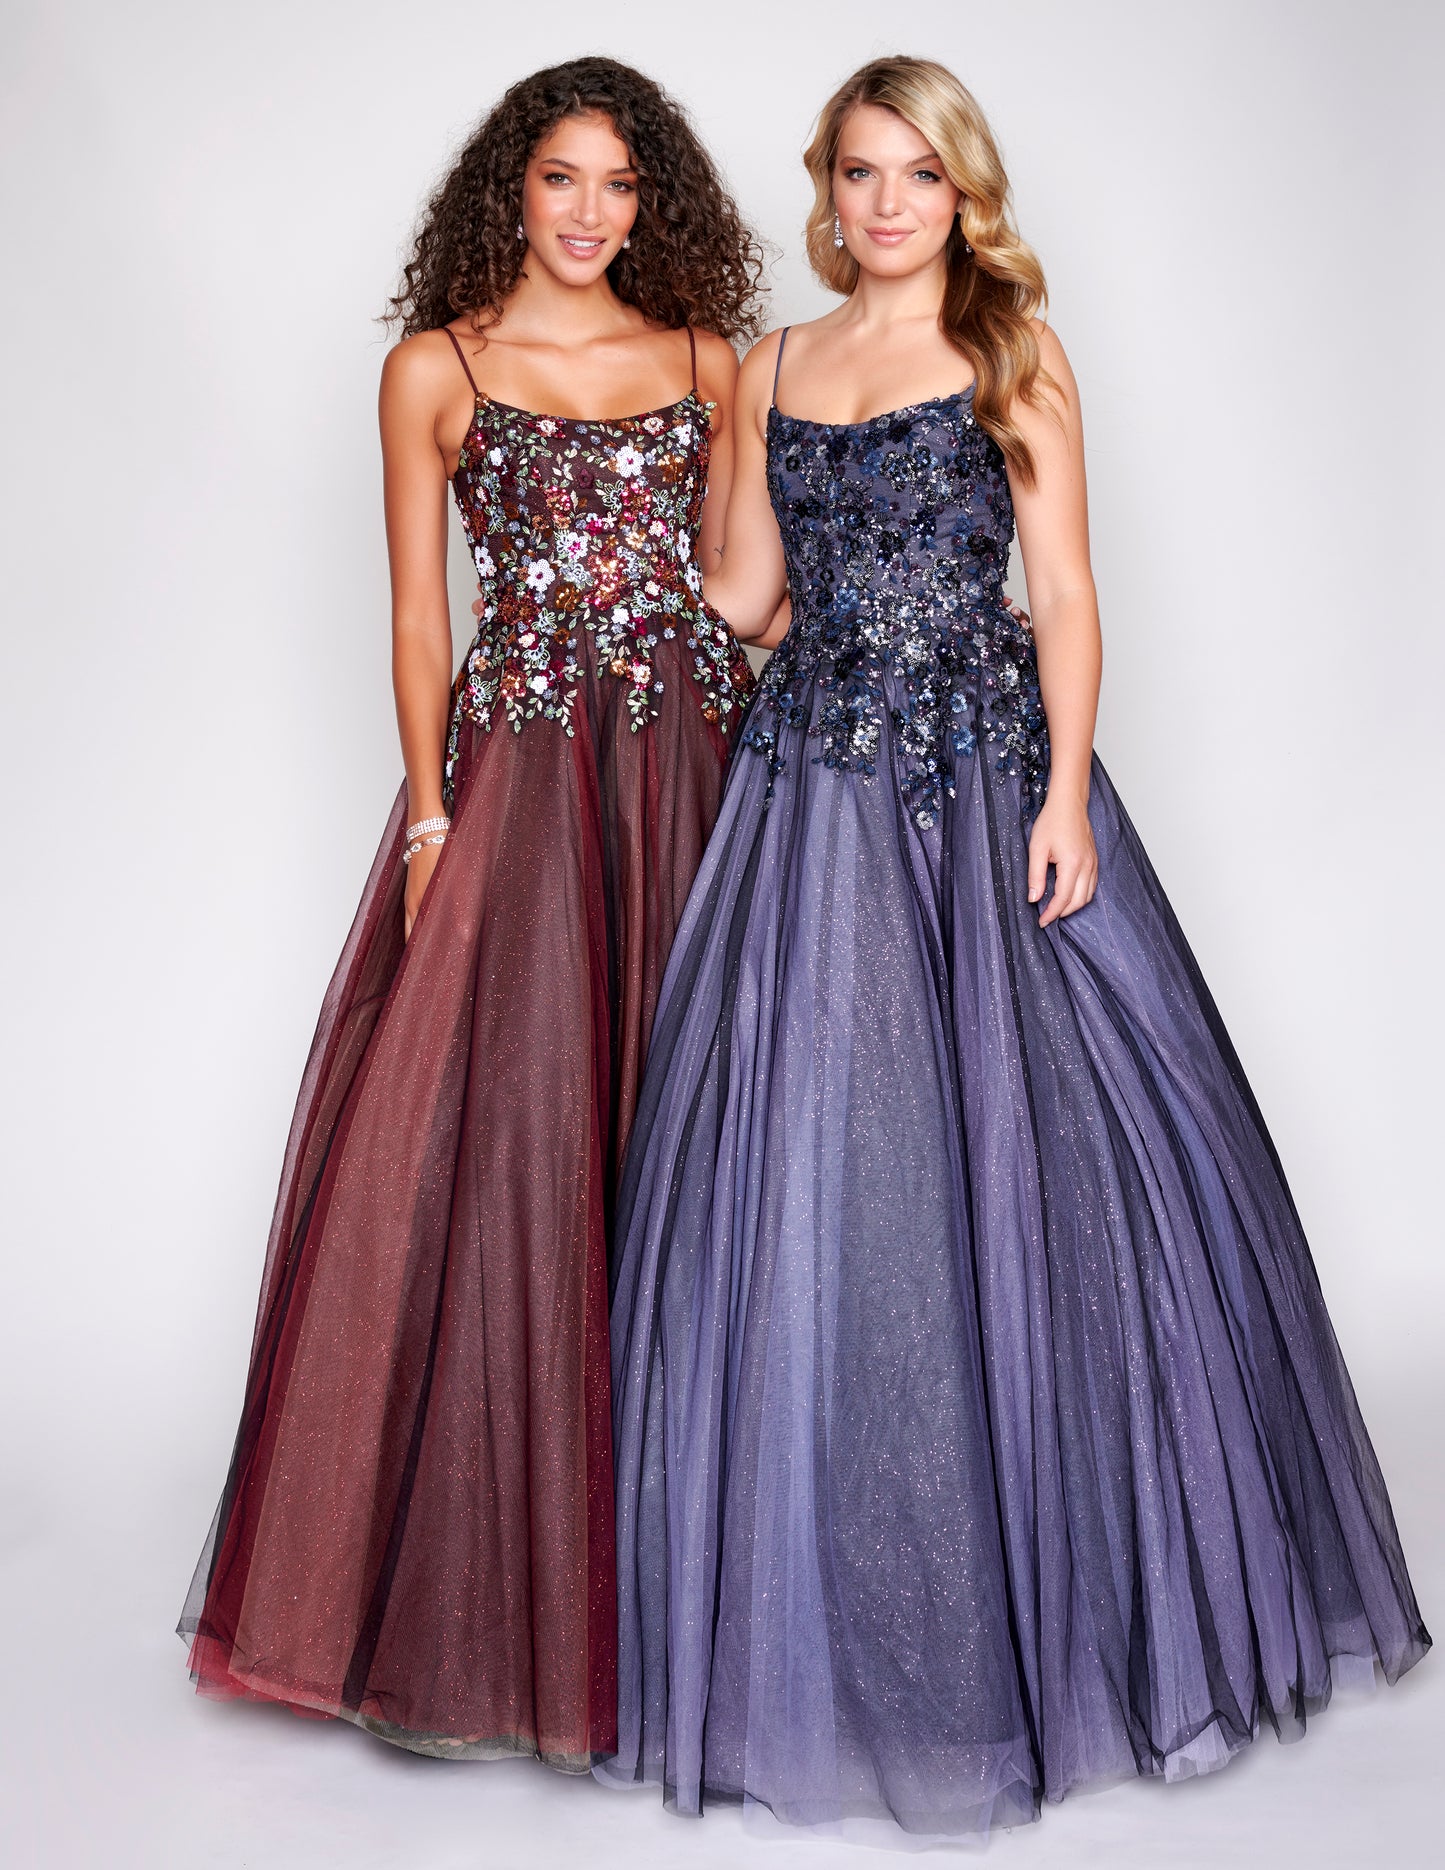 Nina Canacci 3206 Multi Colored Prom Dress Sequined Flower Top Tulle Ballgown Skirt  Colors:  Black Purple Multi, Black Red Multi